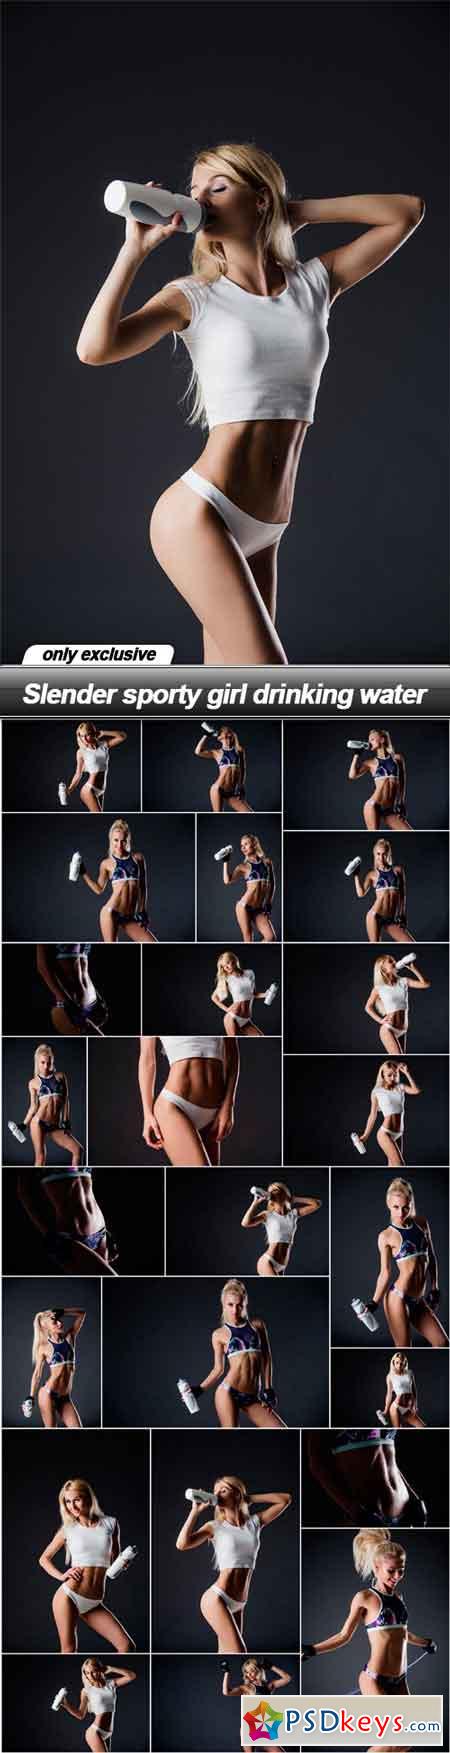 Slender sporty girl drinking water - 24 UHQ JPEG